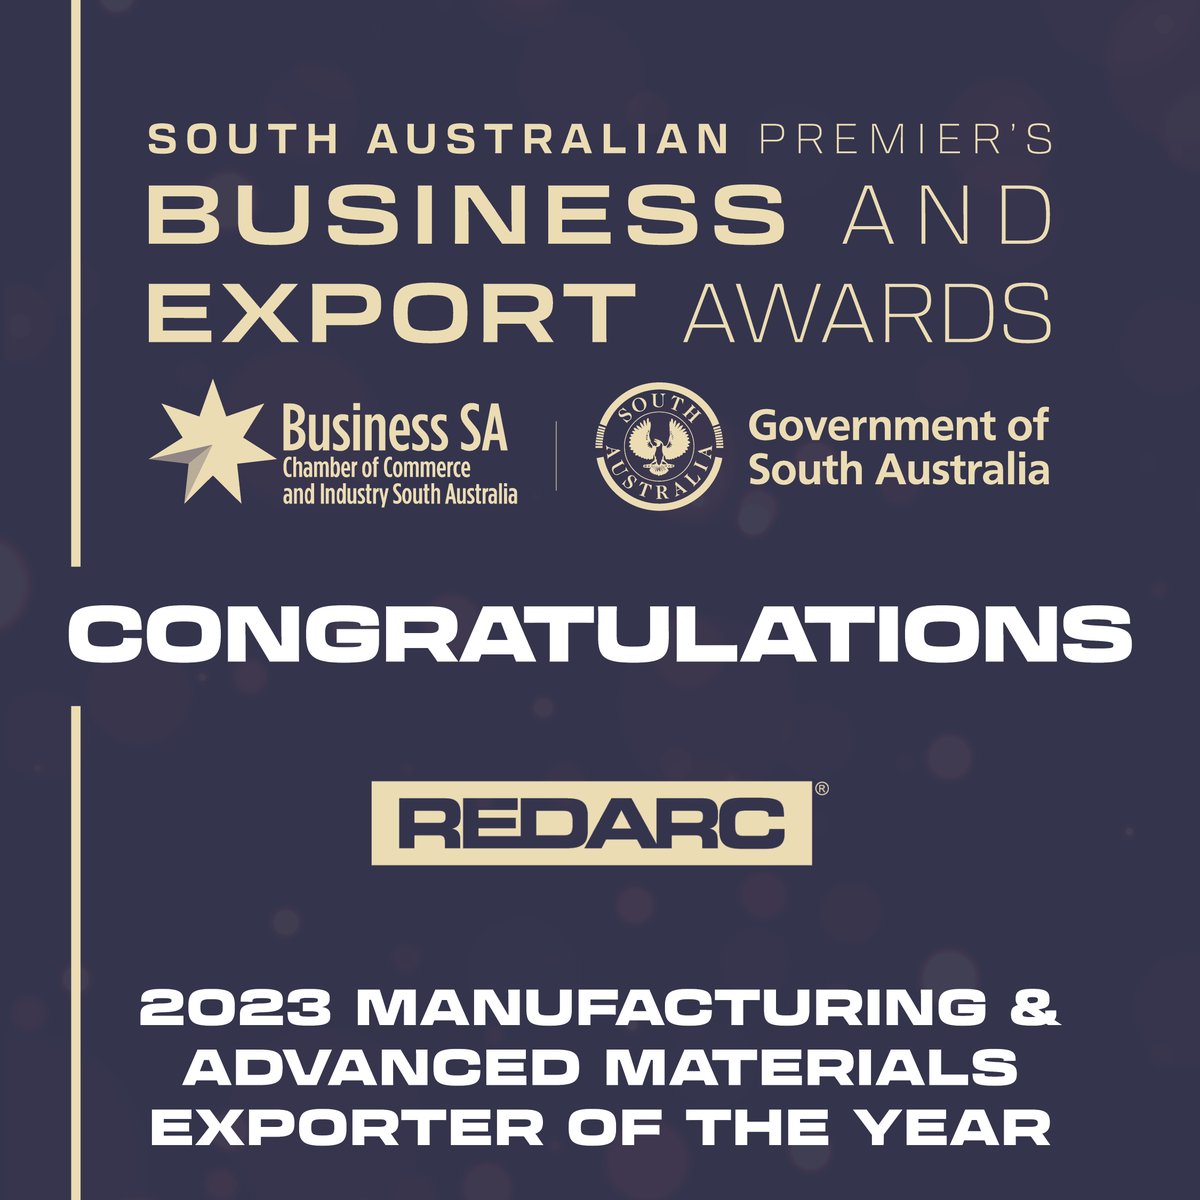 South Australian Premier’s Business and Export Awards, Manufacturing and Advanced Materials Export Award, goes to REDARC Electronics🏆 

#SAPremiersBusinessandExportAwards #BusinessSA